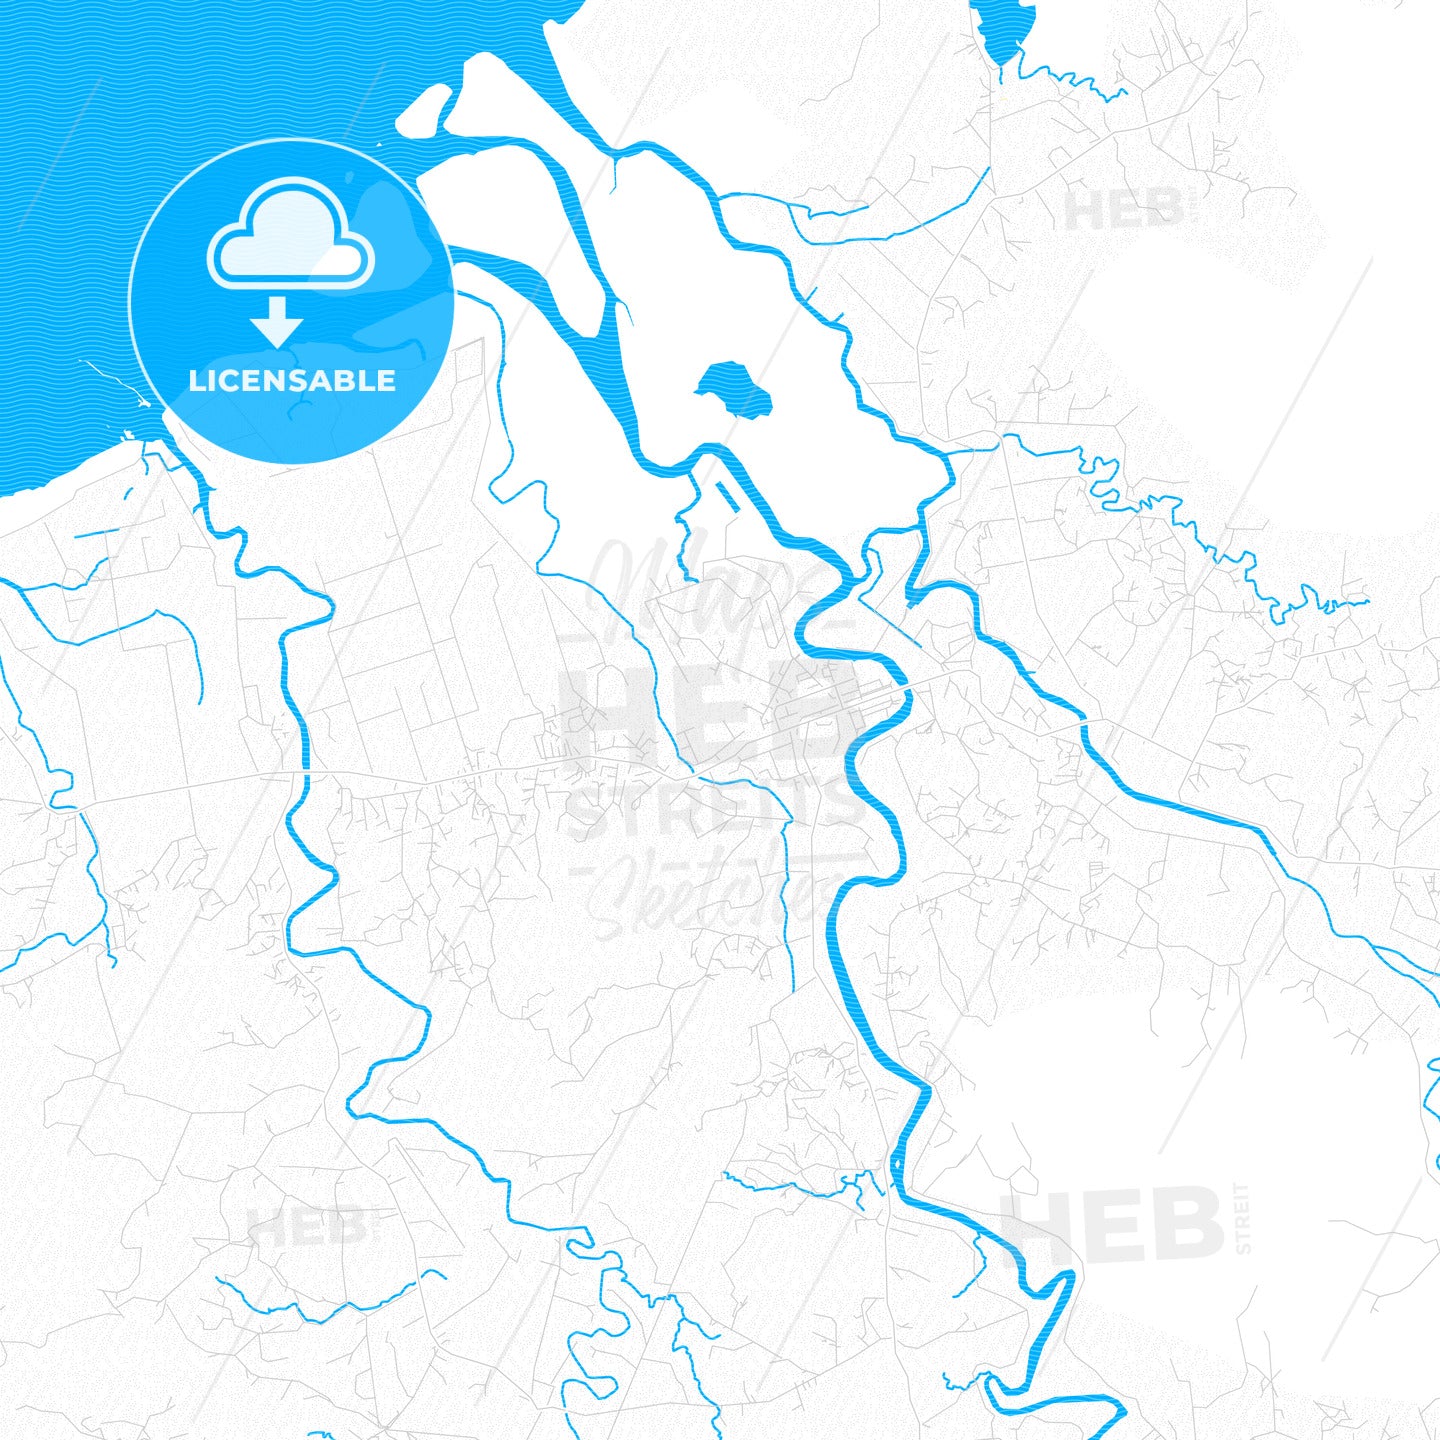 Labasa, Fiji PDF vector map with water in focus